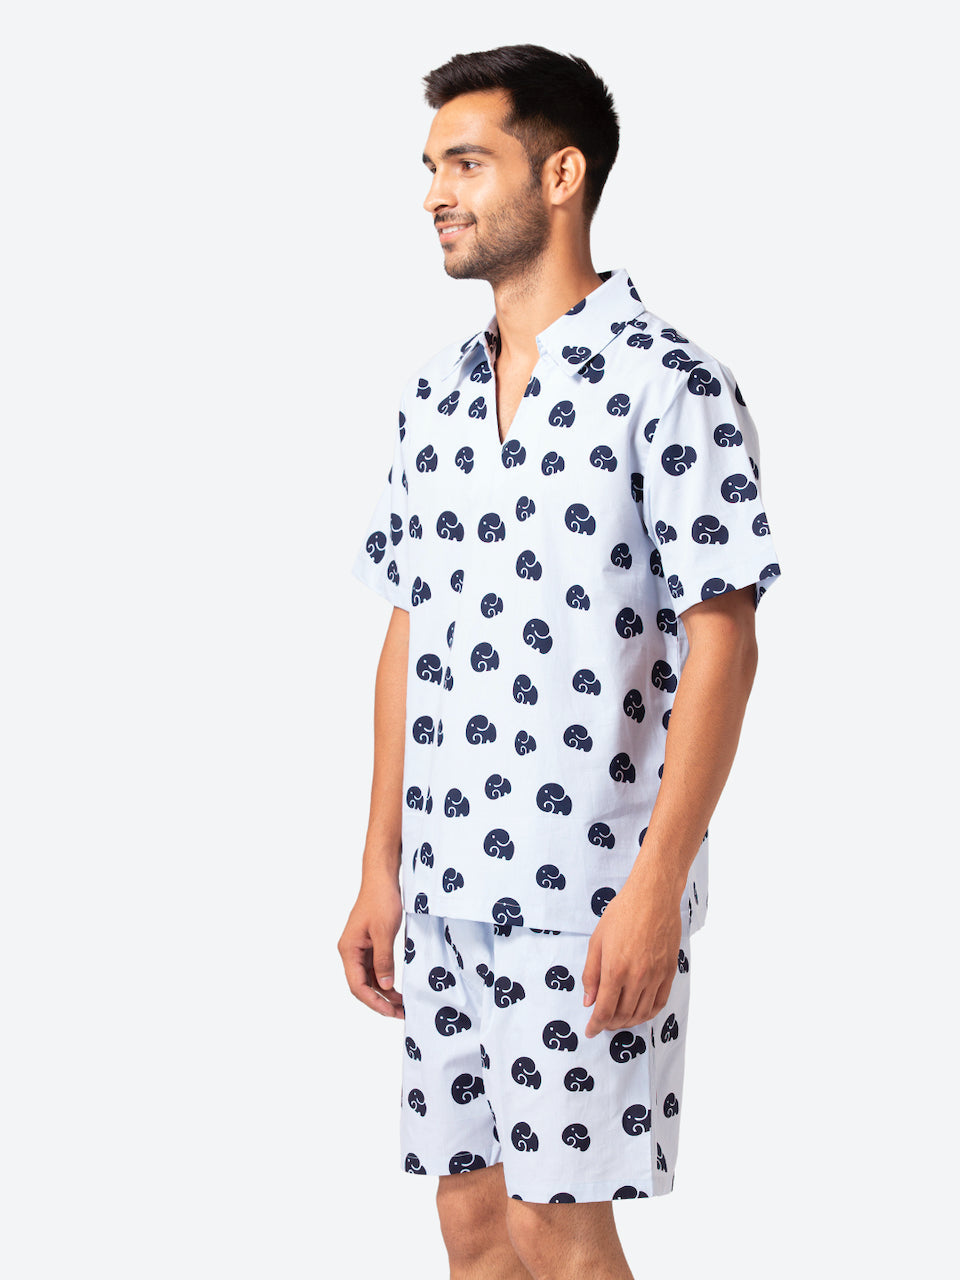 Men printed Black Lining Stylish Night Suit Set Shorts with Shirt Sleepwear  Men's